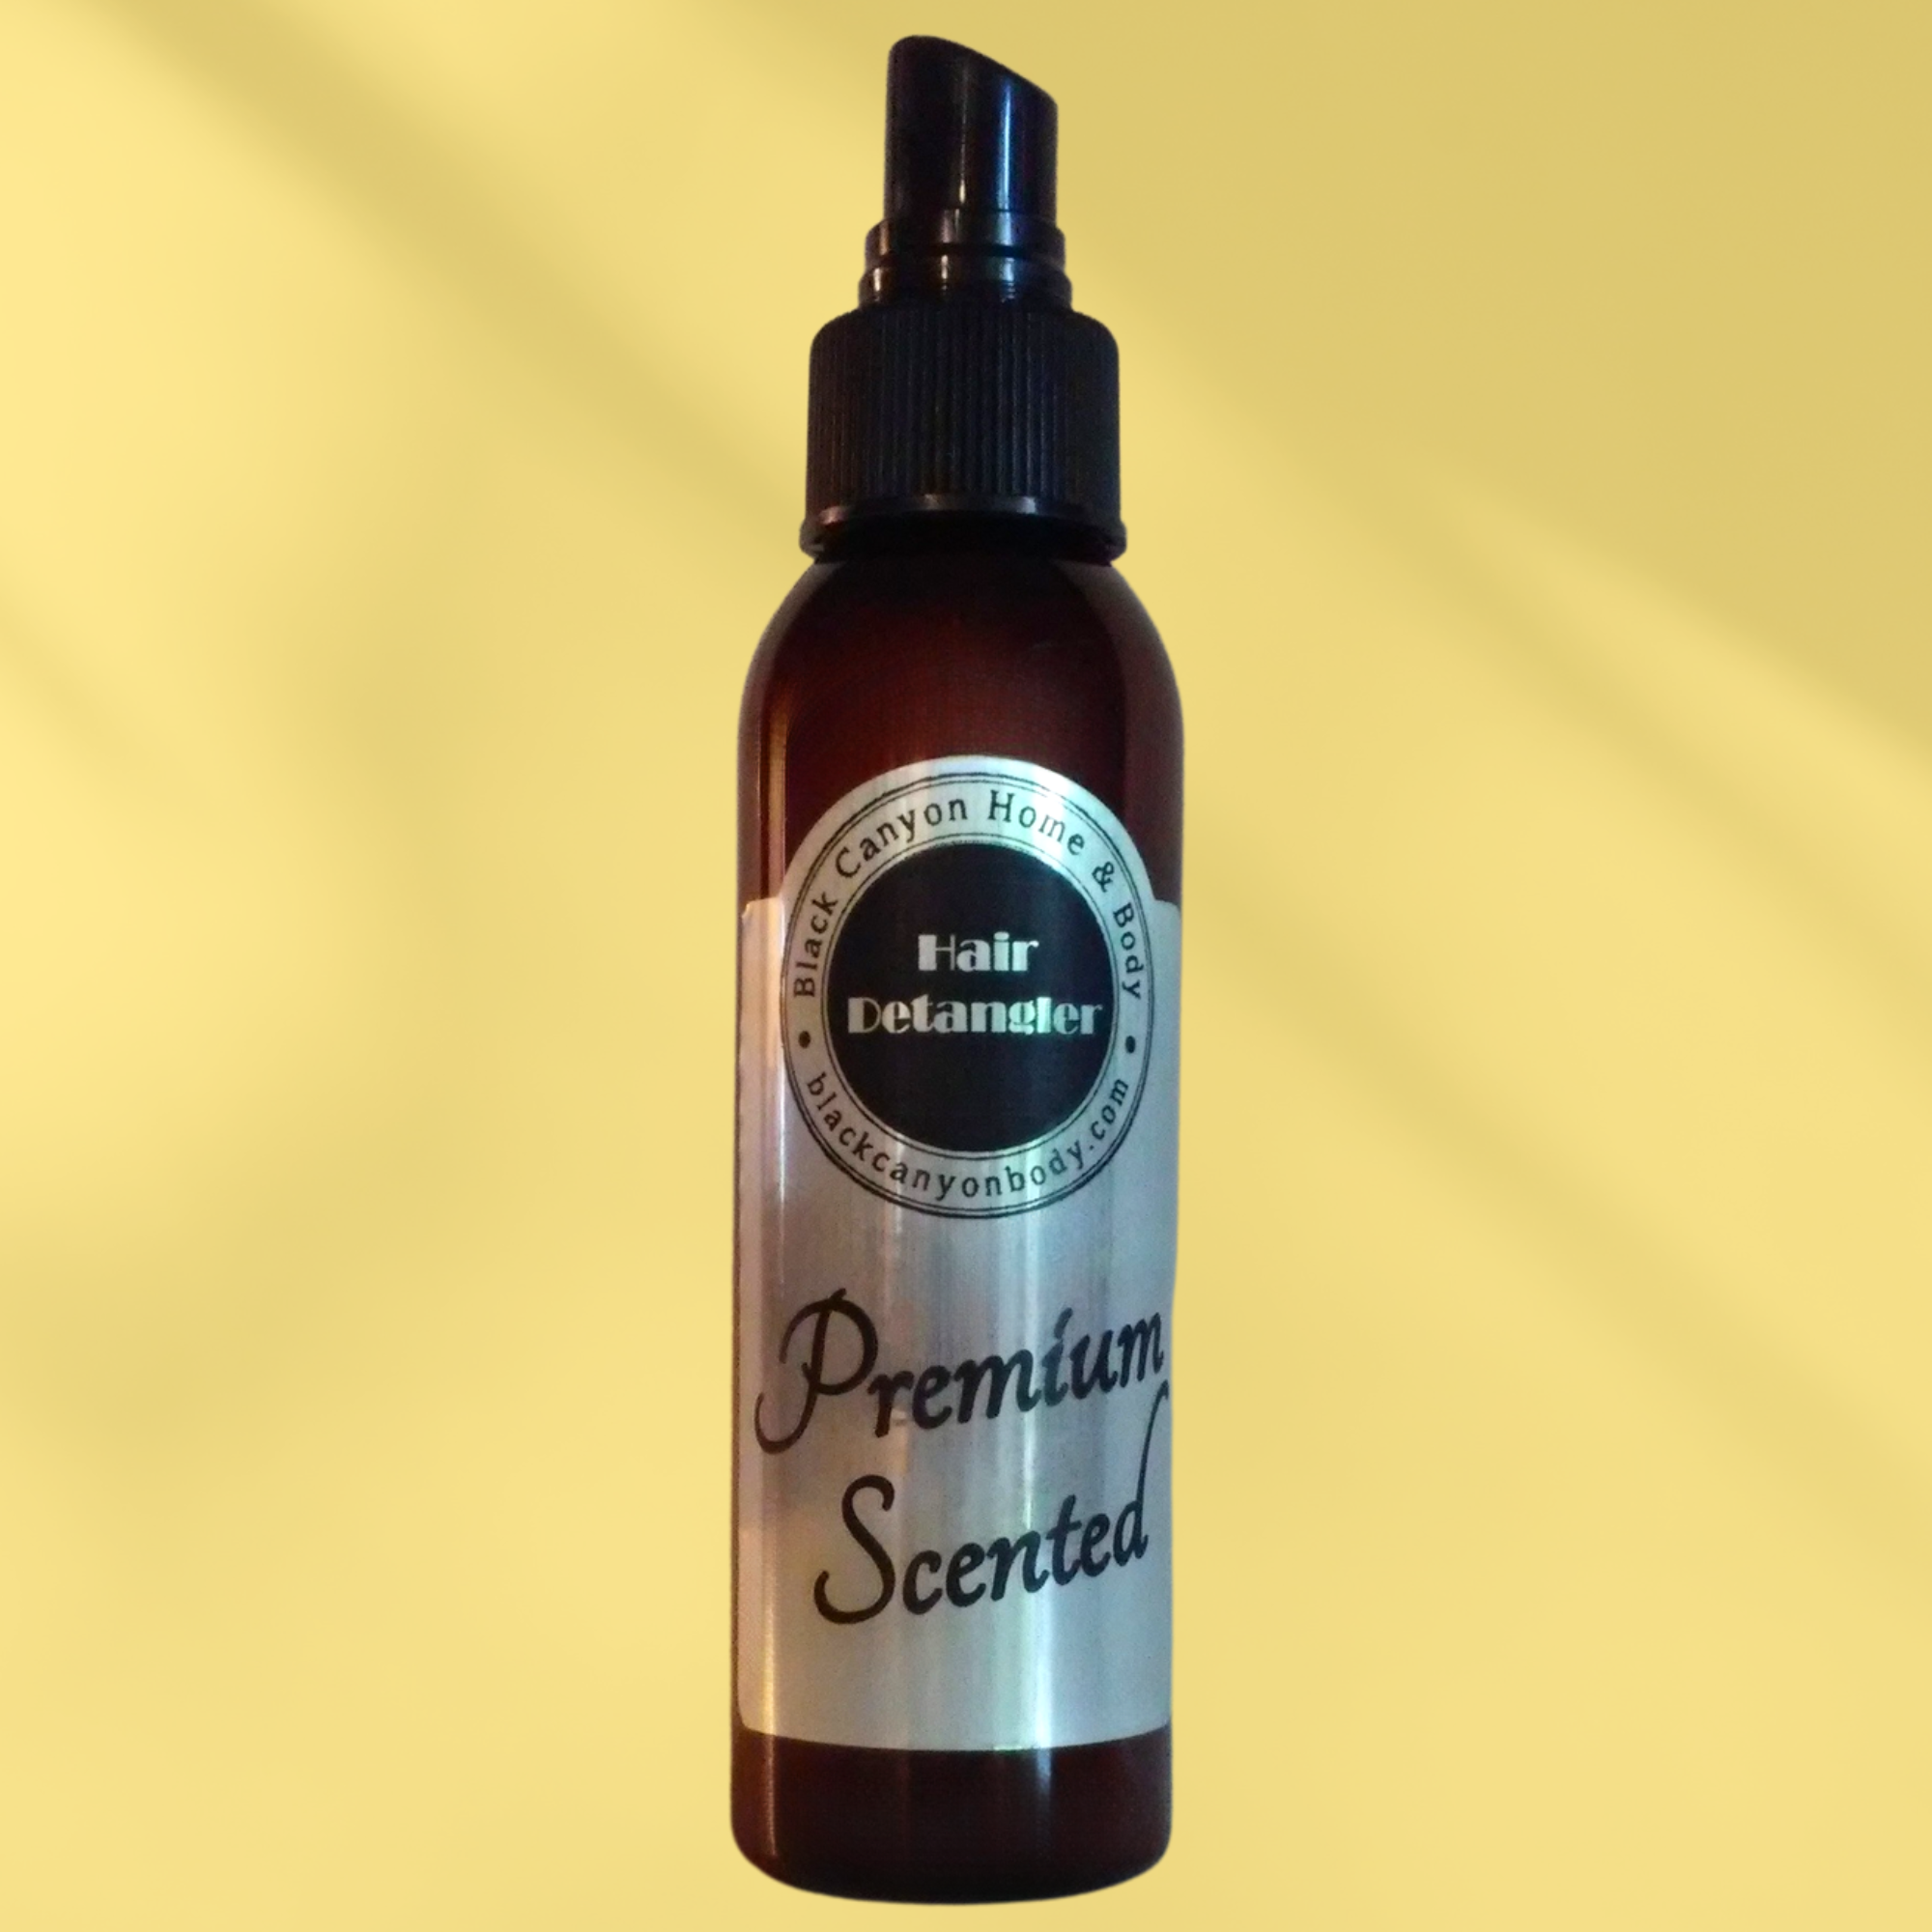 Black Canyon Autumn Spiced Fir Scented Hair Detangler Spray with Olive Oil